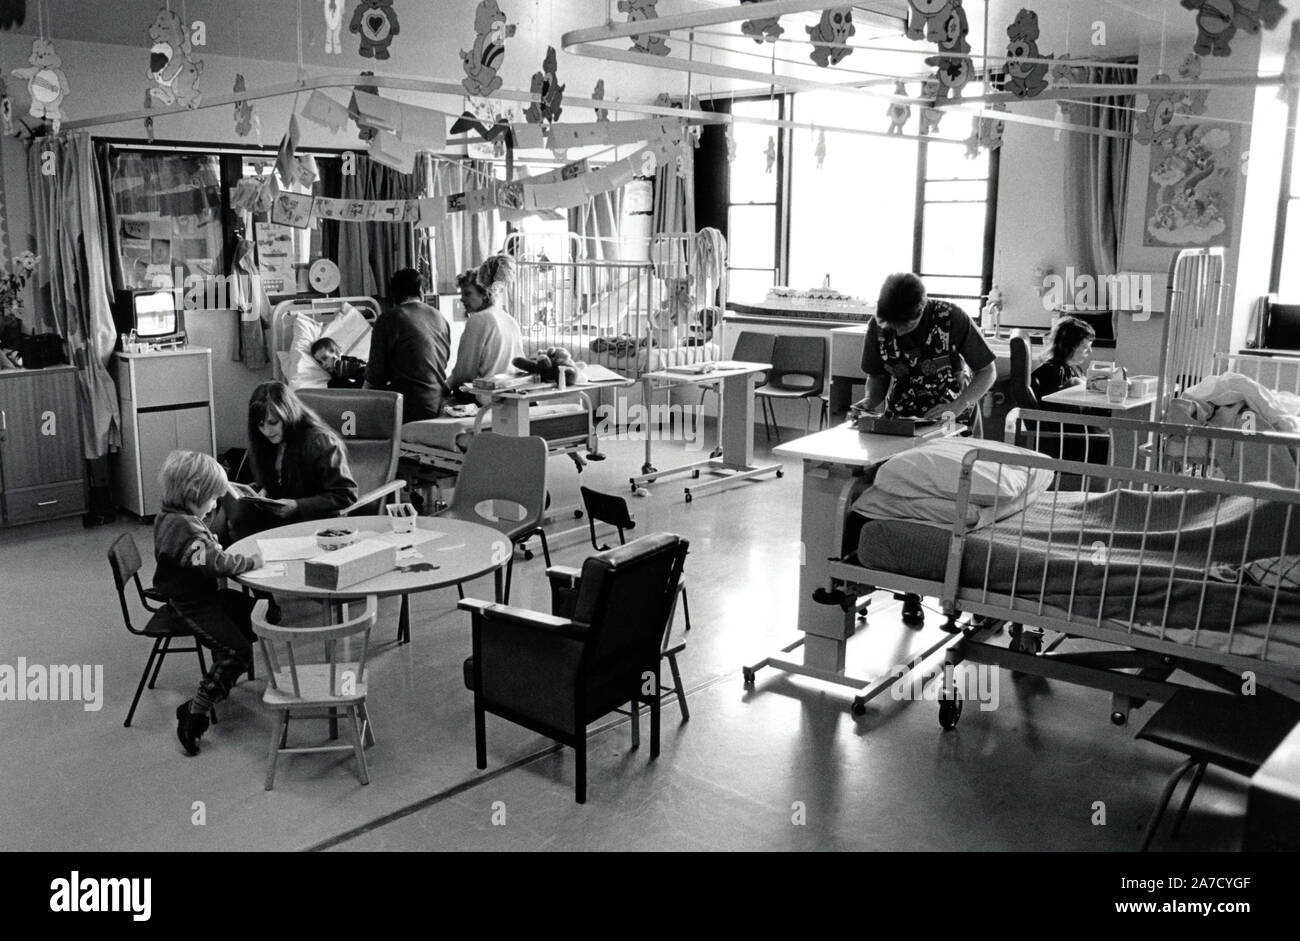 Salle commune des enfants, Queen's Medical Center, l'hôpital Mars 1989 Nottingham UK Banque D'Images